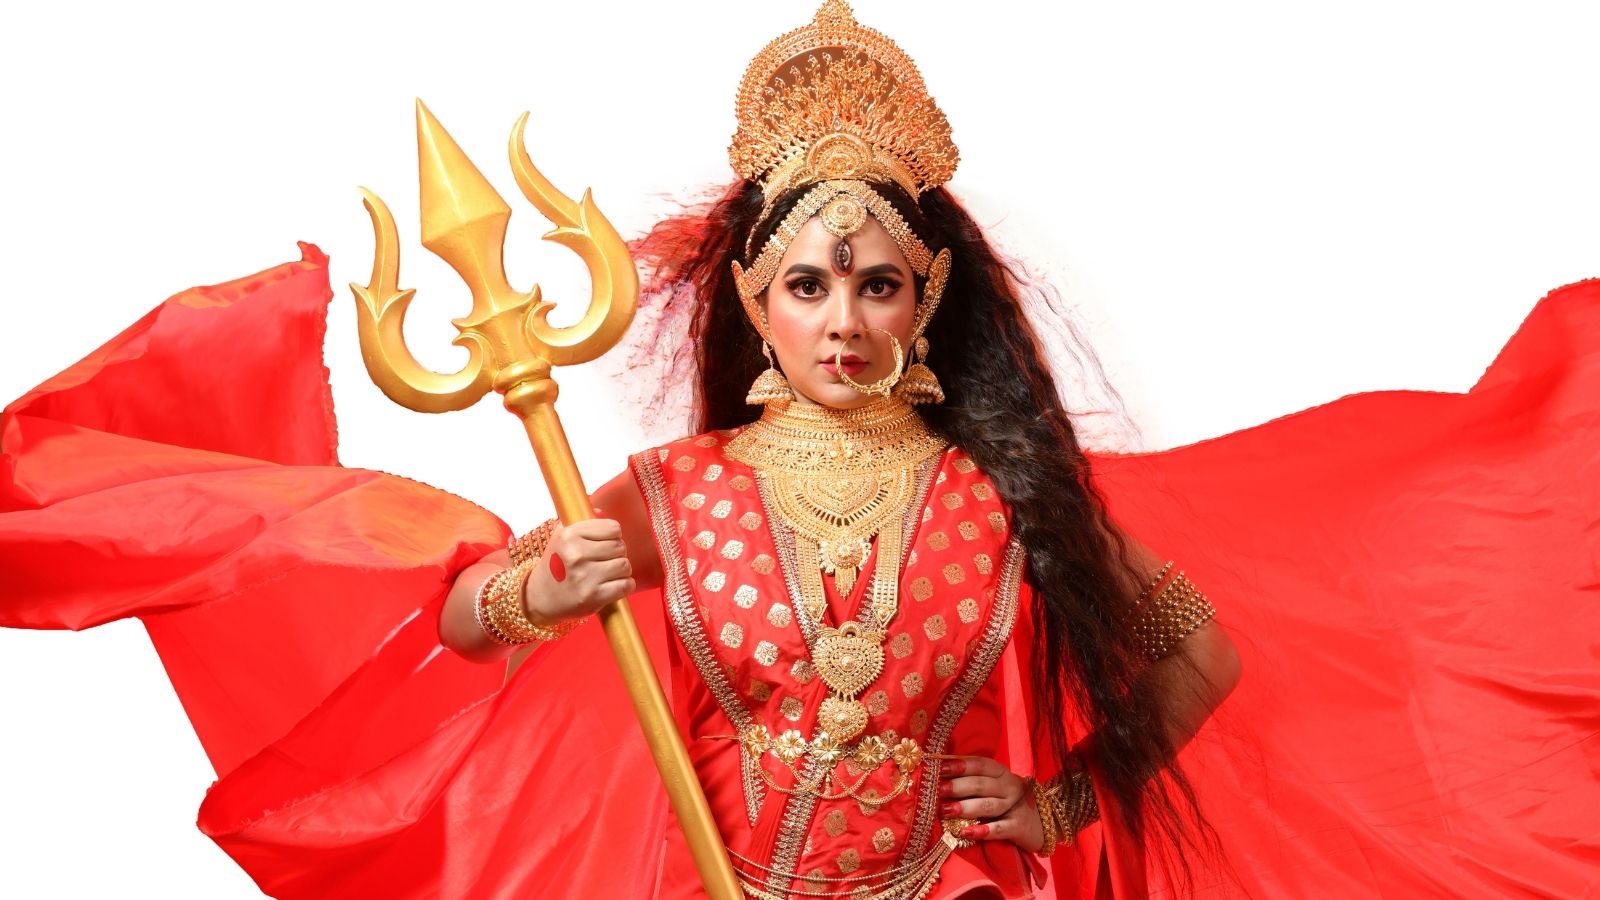 Subhashree Ganguly' S Mahisasuromardini Look Reveled, Actress Looks  Scanning In New Attire | মহালয়ায় মহিষাসুরমর্দিনী শুভশ্রী, চমক রইল  আদ্যাশক্তি রুপেও